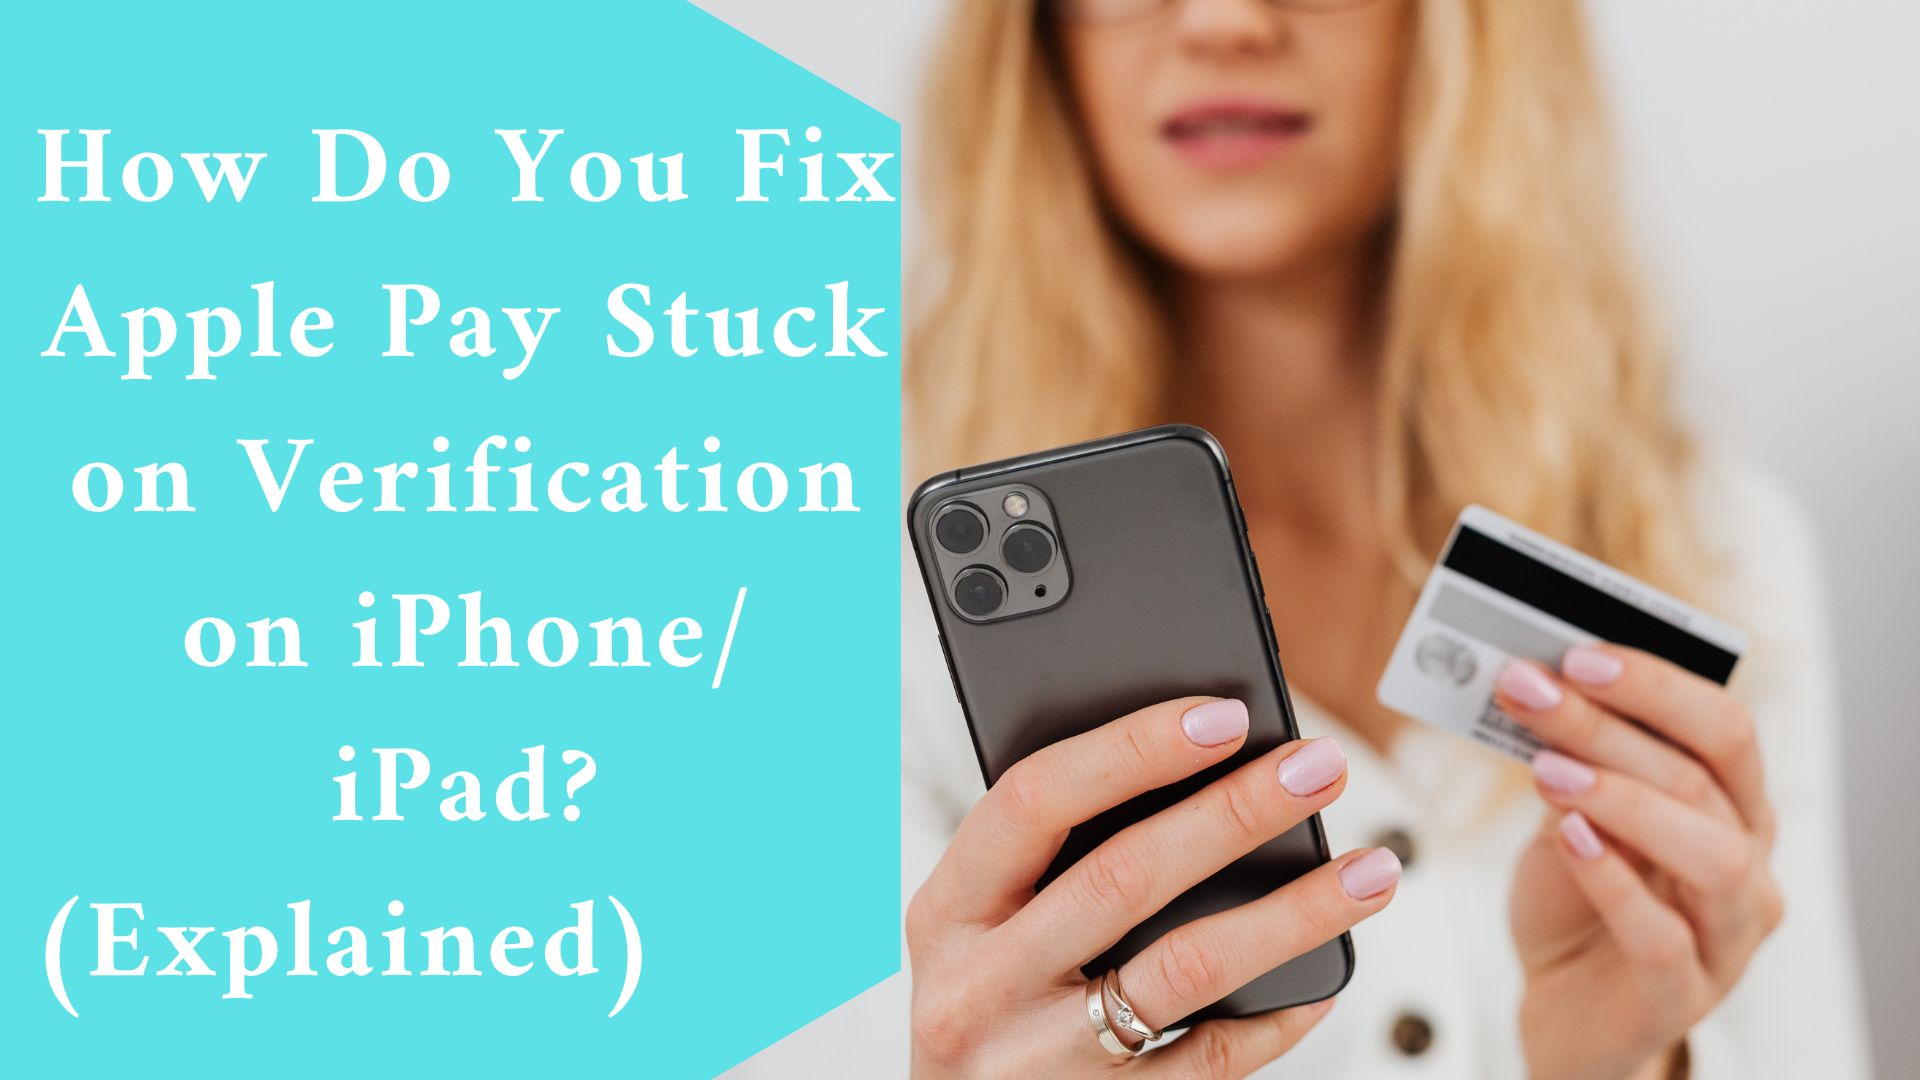 How Do You Fix Apple Pay Stuck on Verification on iPhone/ iPad? (Explained)